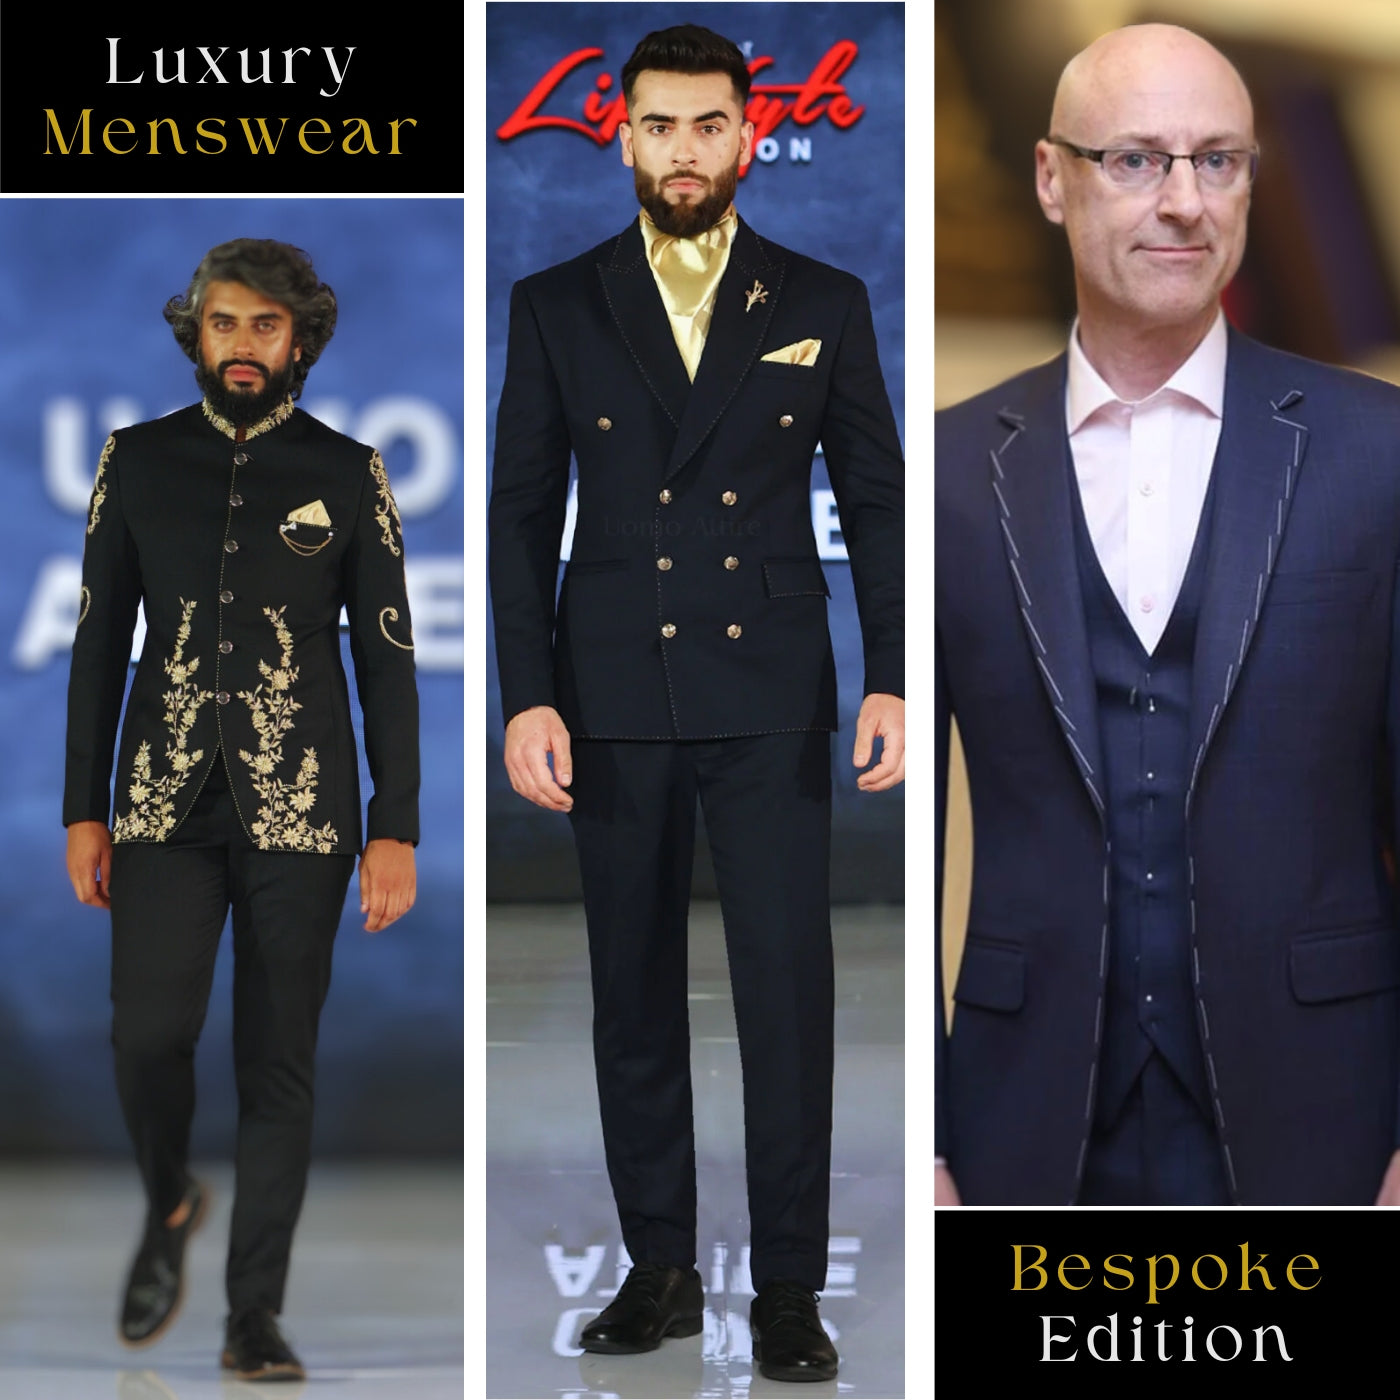  Uomo Attire is a luxury menswear brand in tailor-made attire with a customized look in Italian cut